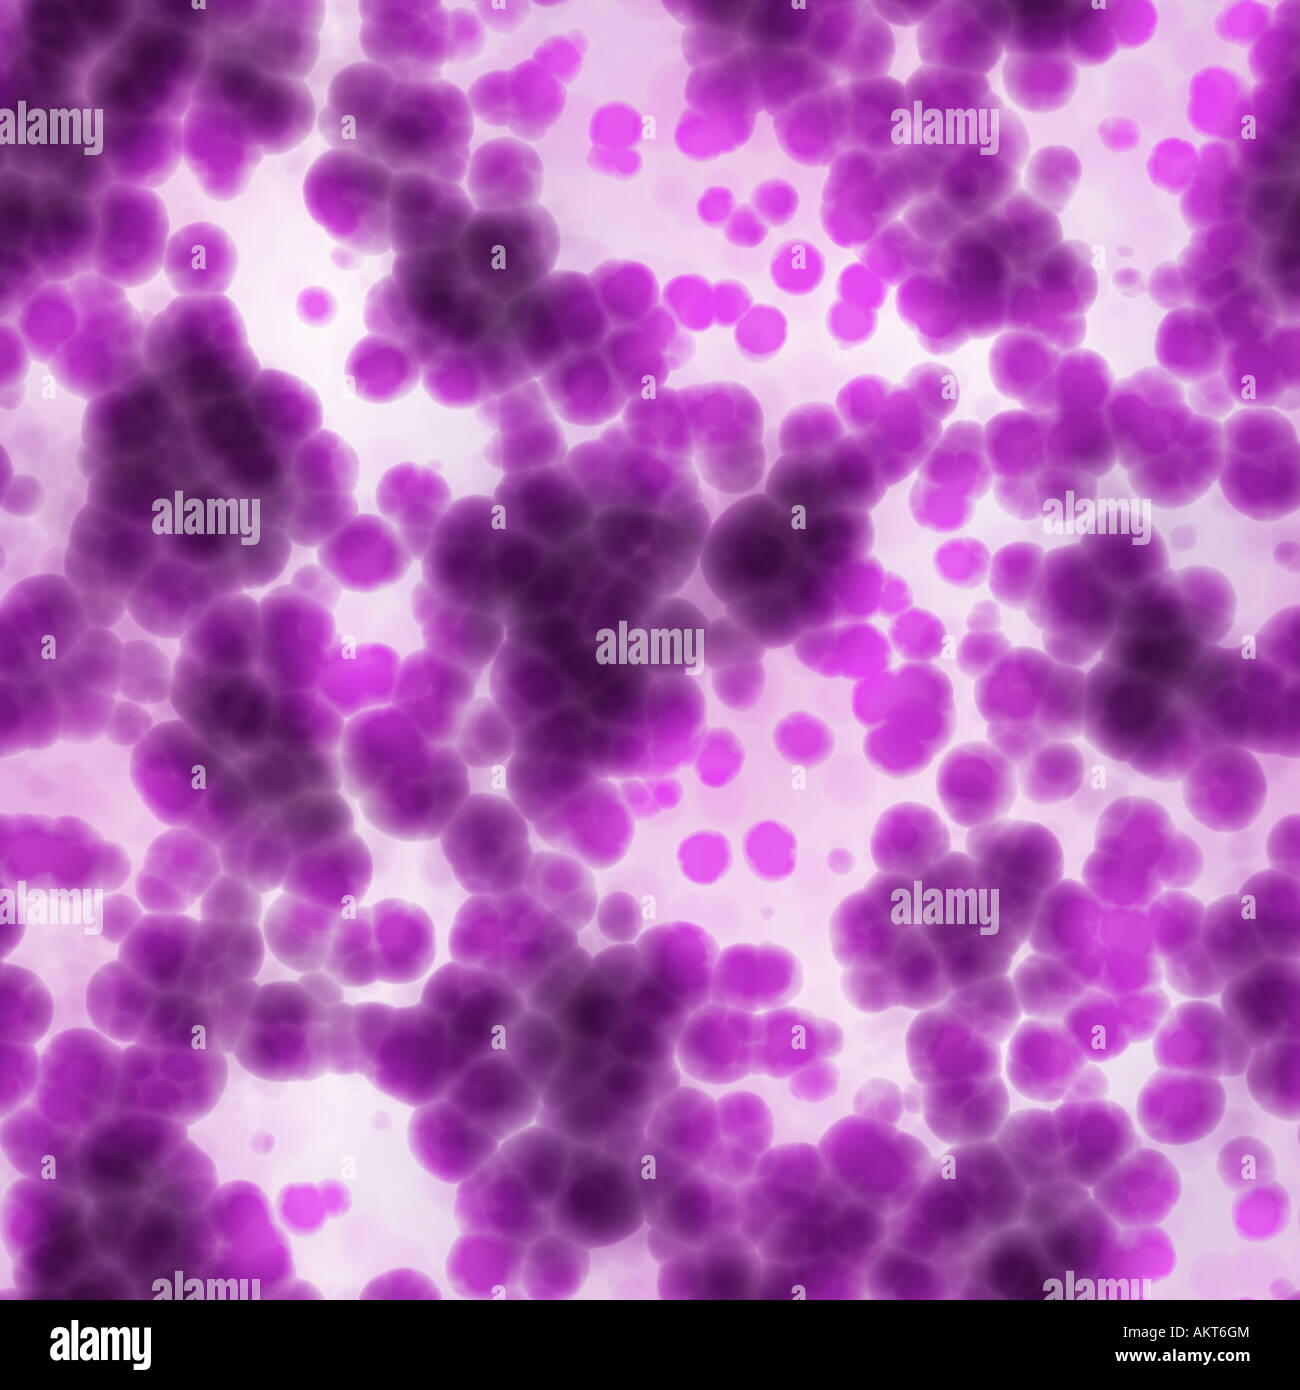 large background image of purple cells on white Stock Photo